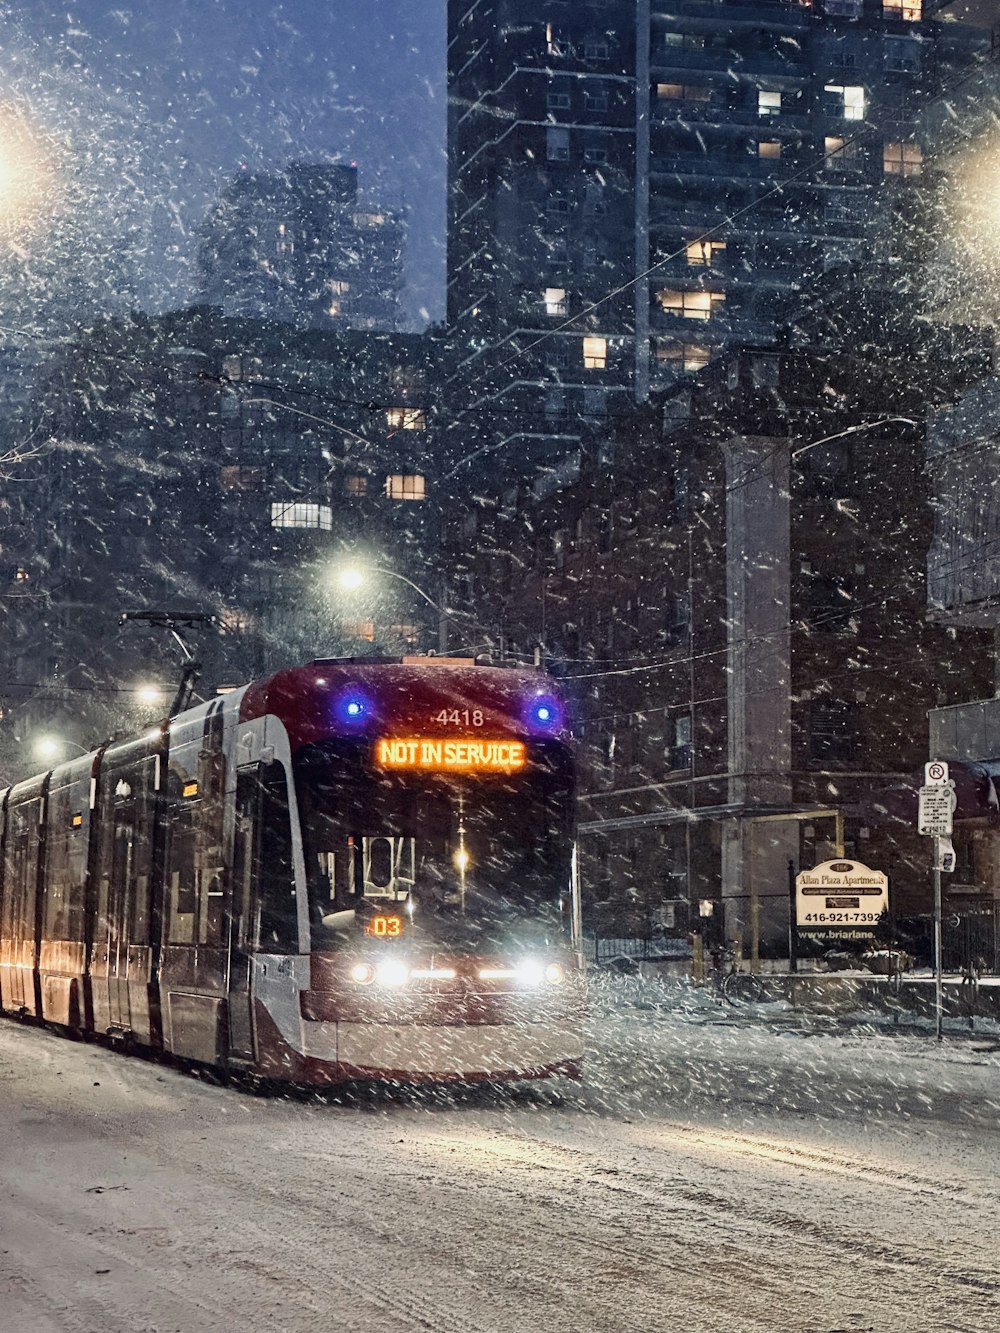 a city bus driving down a snowy street